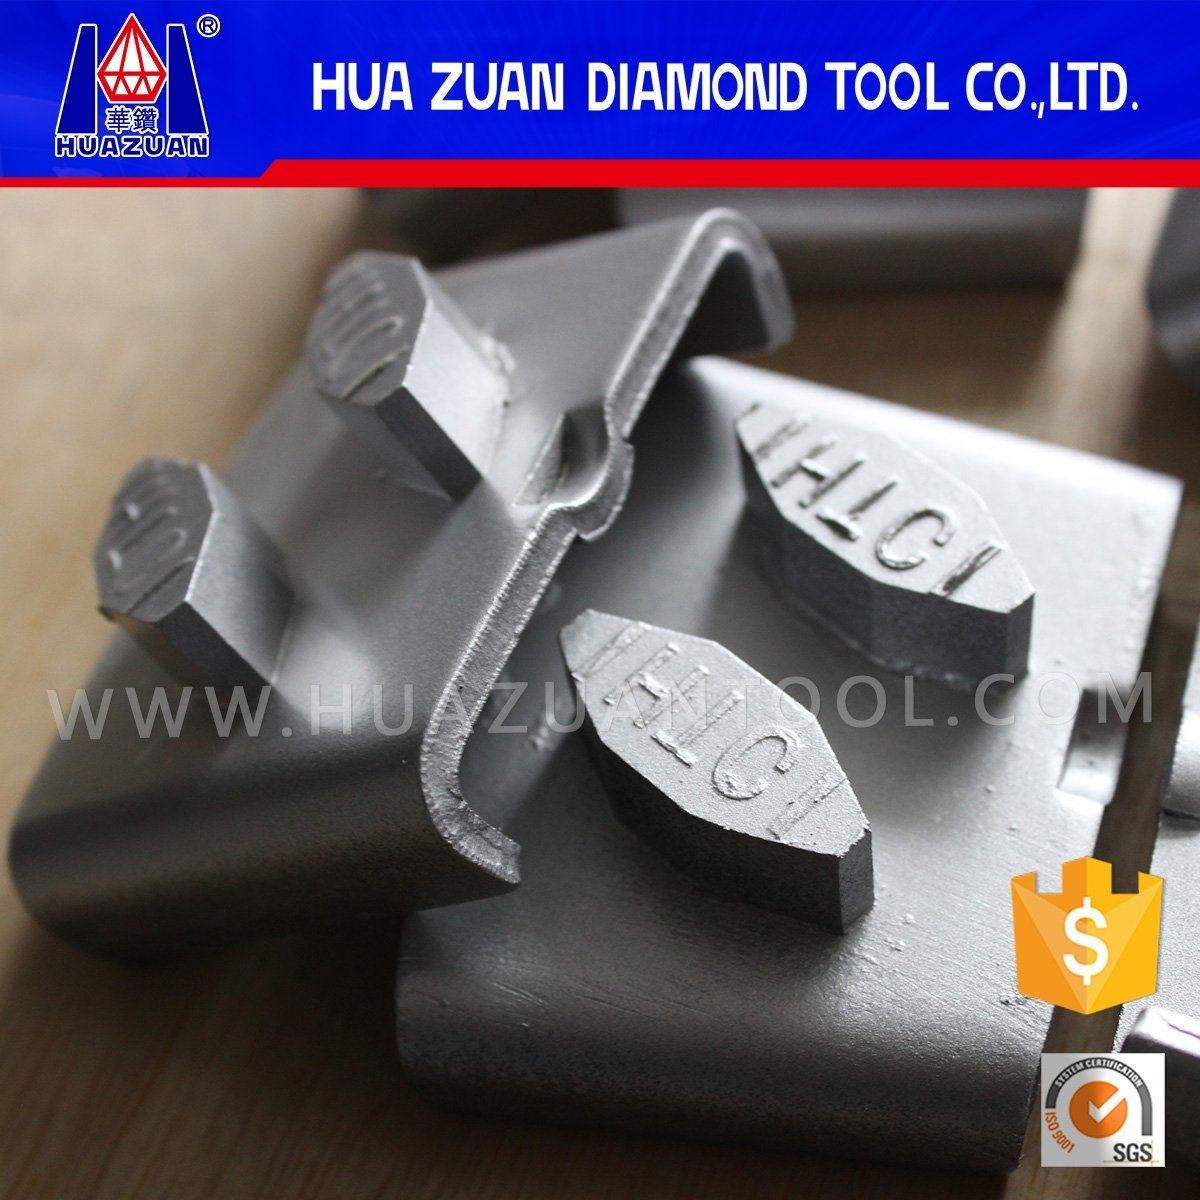 2 Segments Metal Bond Diamond Block for Concrete Grinding Tools